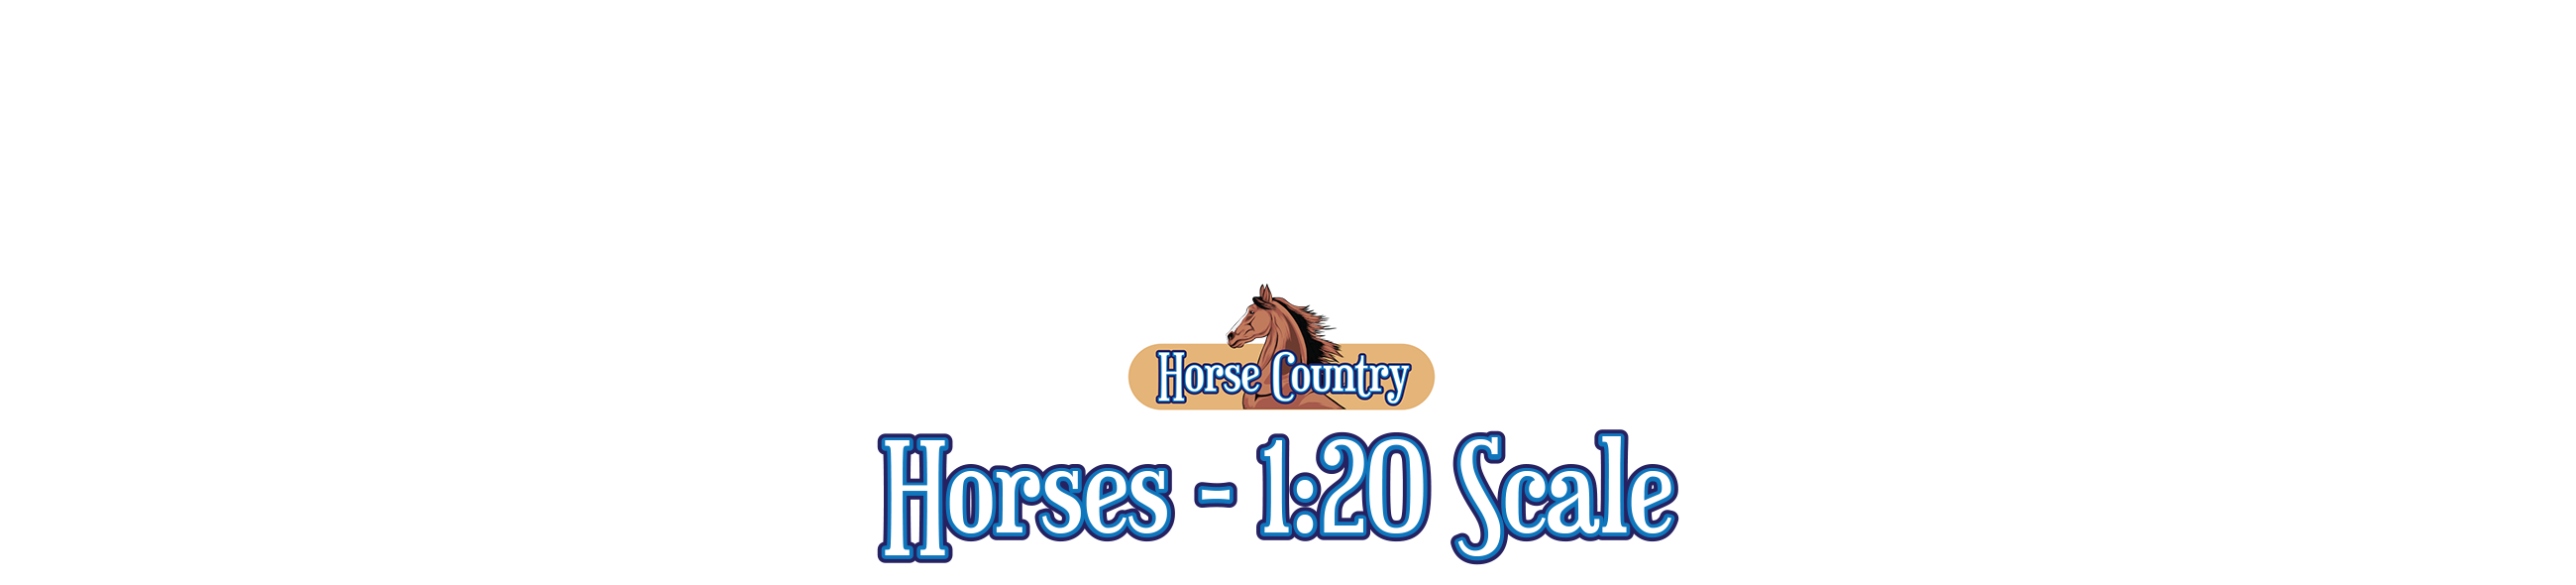 Horses - 1:20 Scale